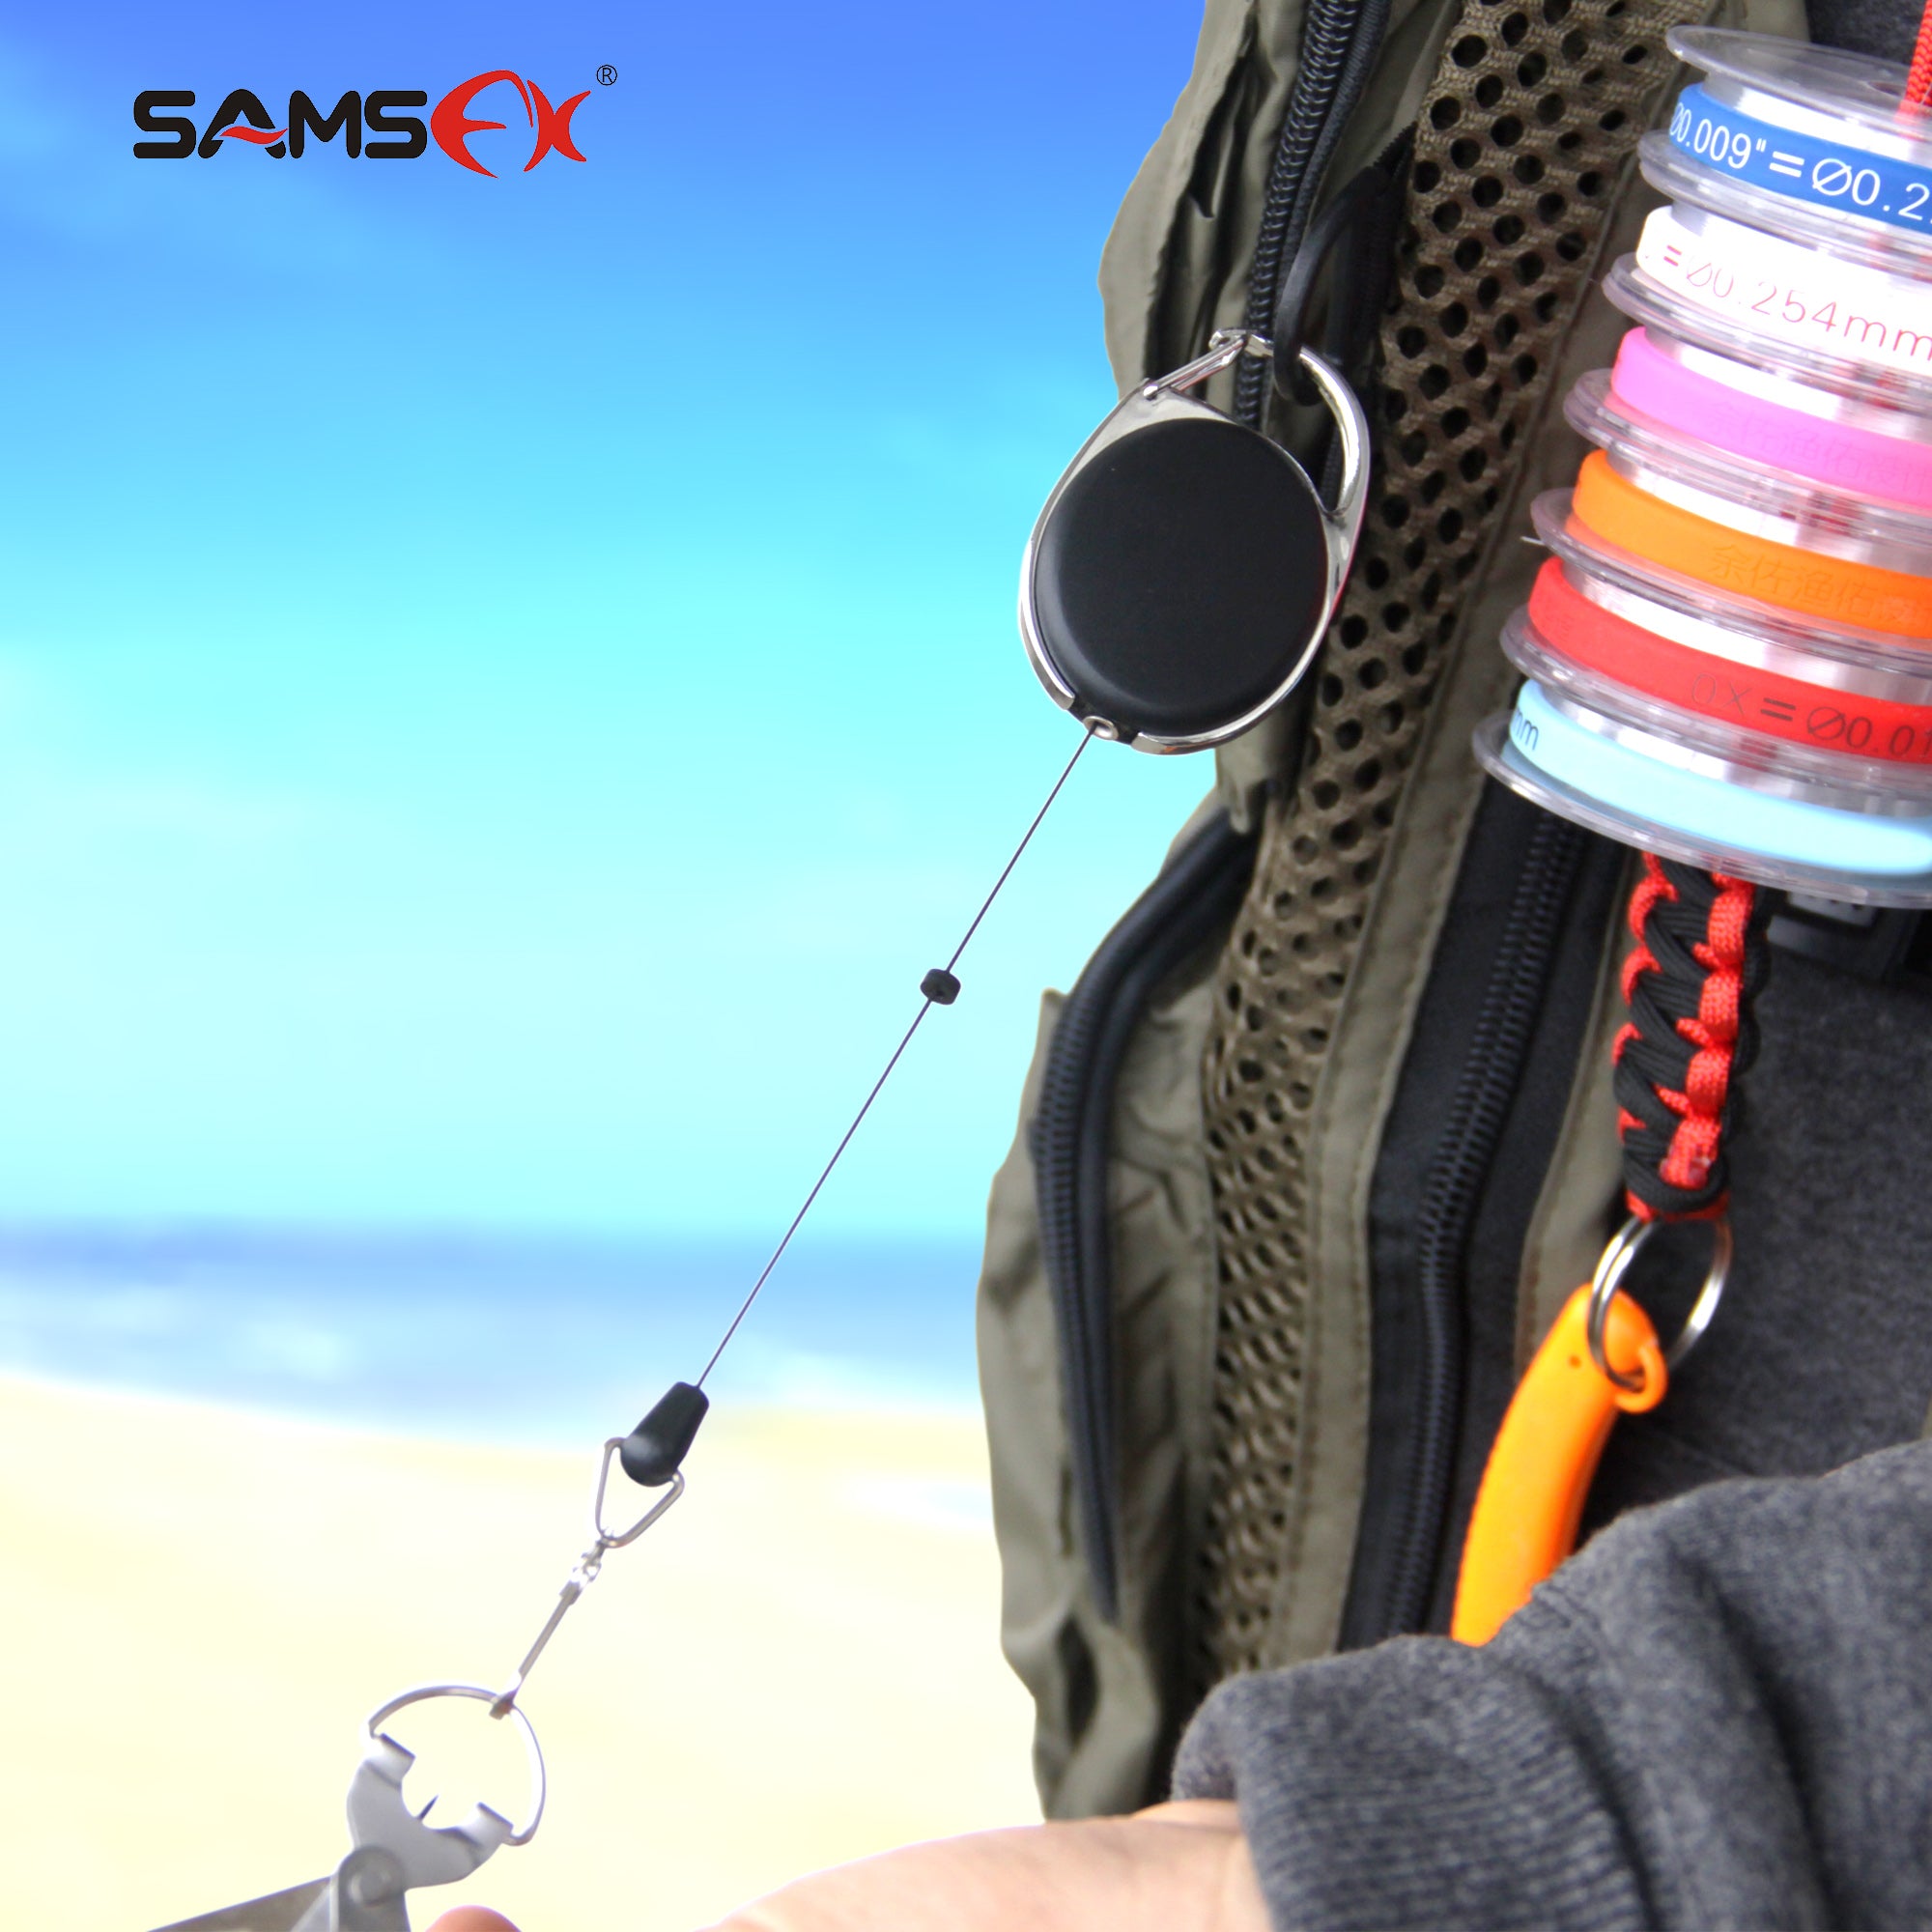 SAMSFX Fly Fishing Zinger Retractors Gear – samsfxfishing